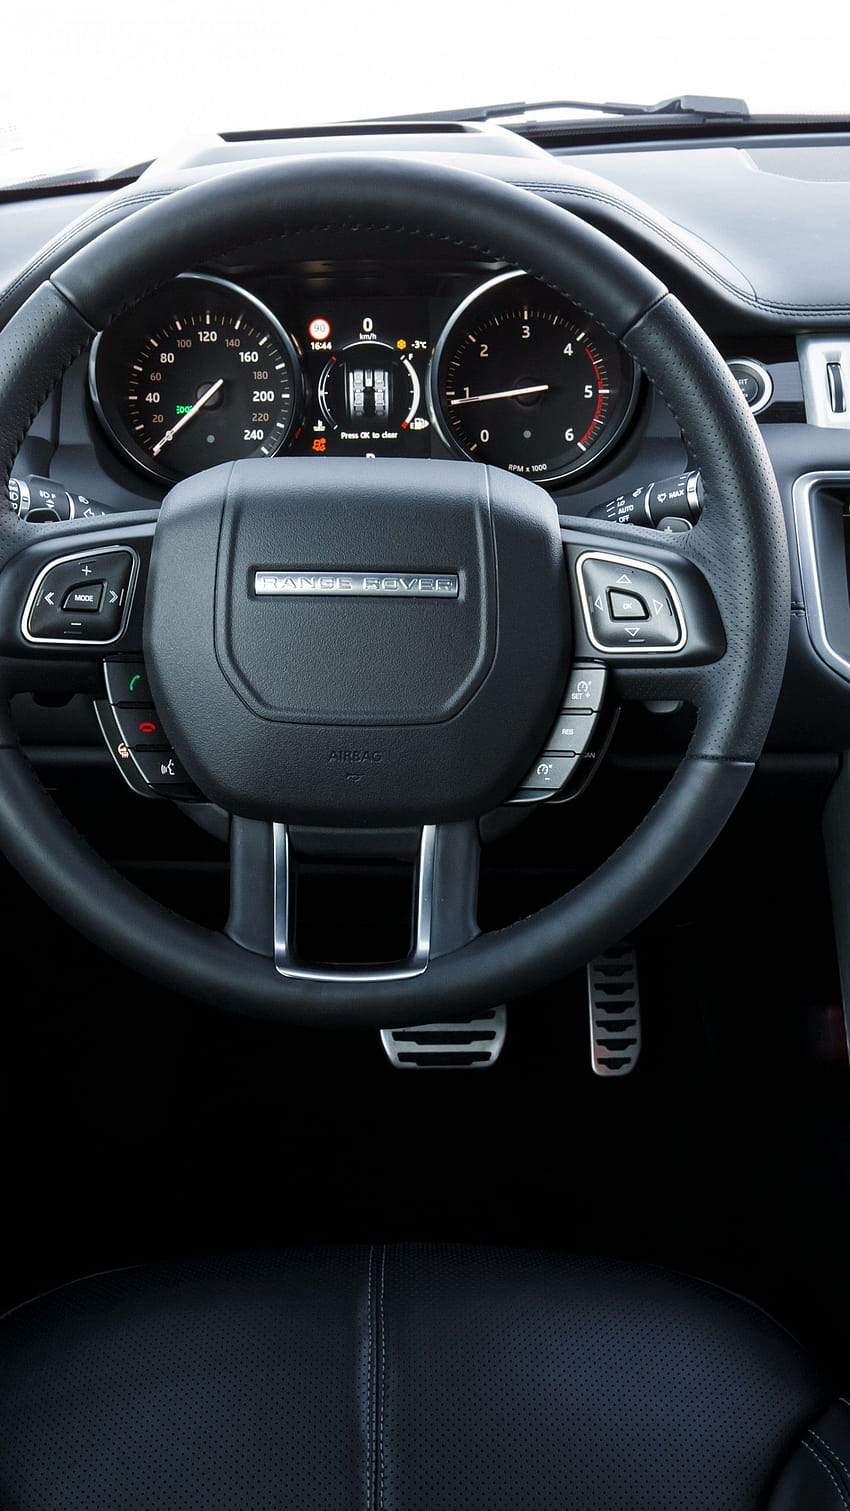 Range Rover Evoque Descapotable, cabriolet, interior, range rover interior fondo de pantalla del teléfono